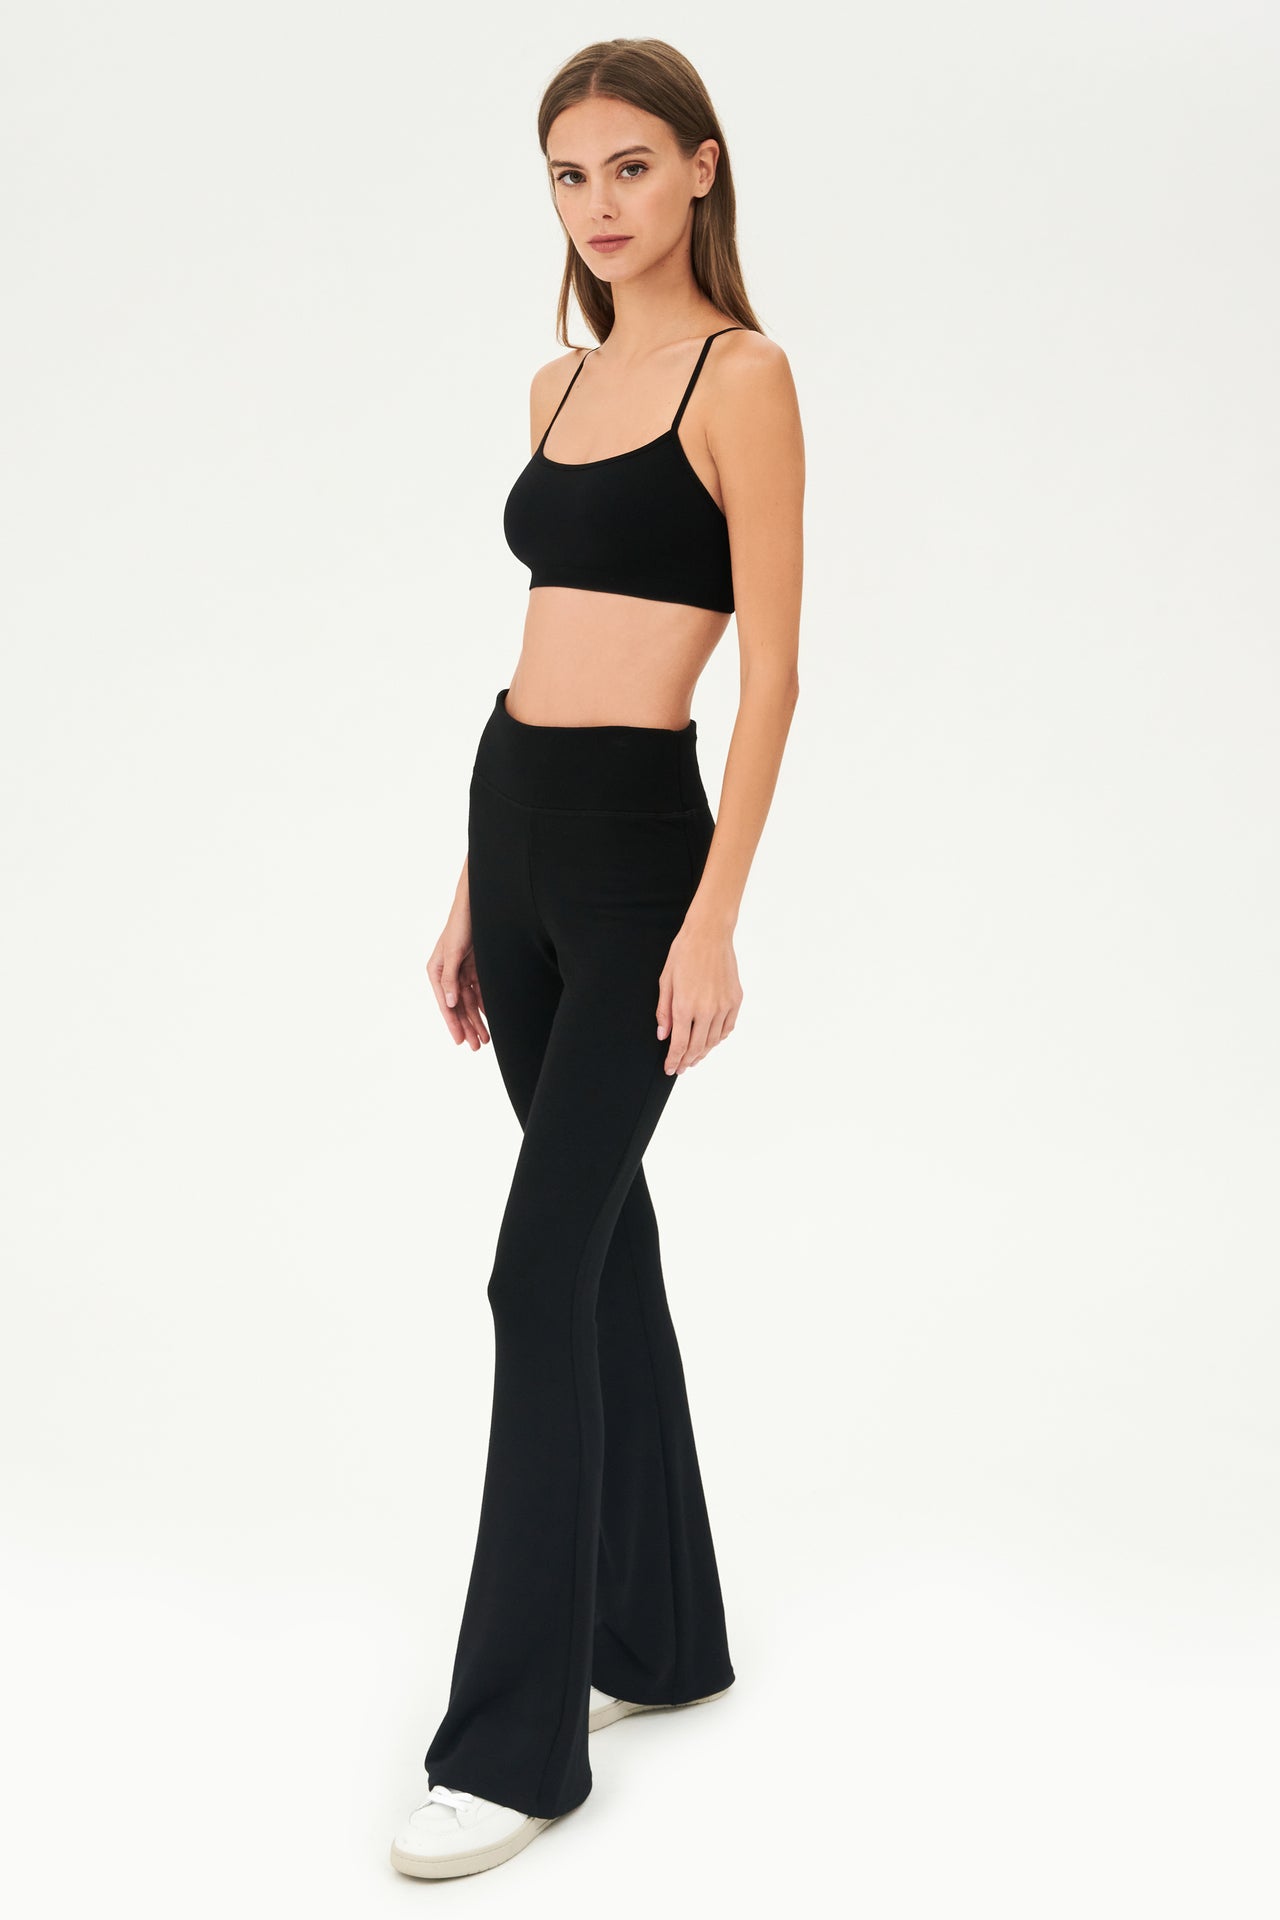 The model is wearing a cozy black crop top and SPLITS59 Raquel Fleece Flare - Black pants.